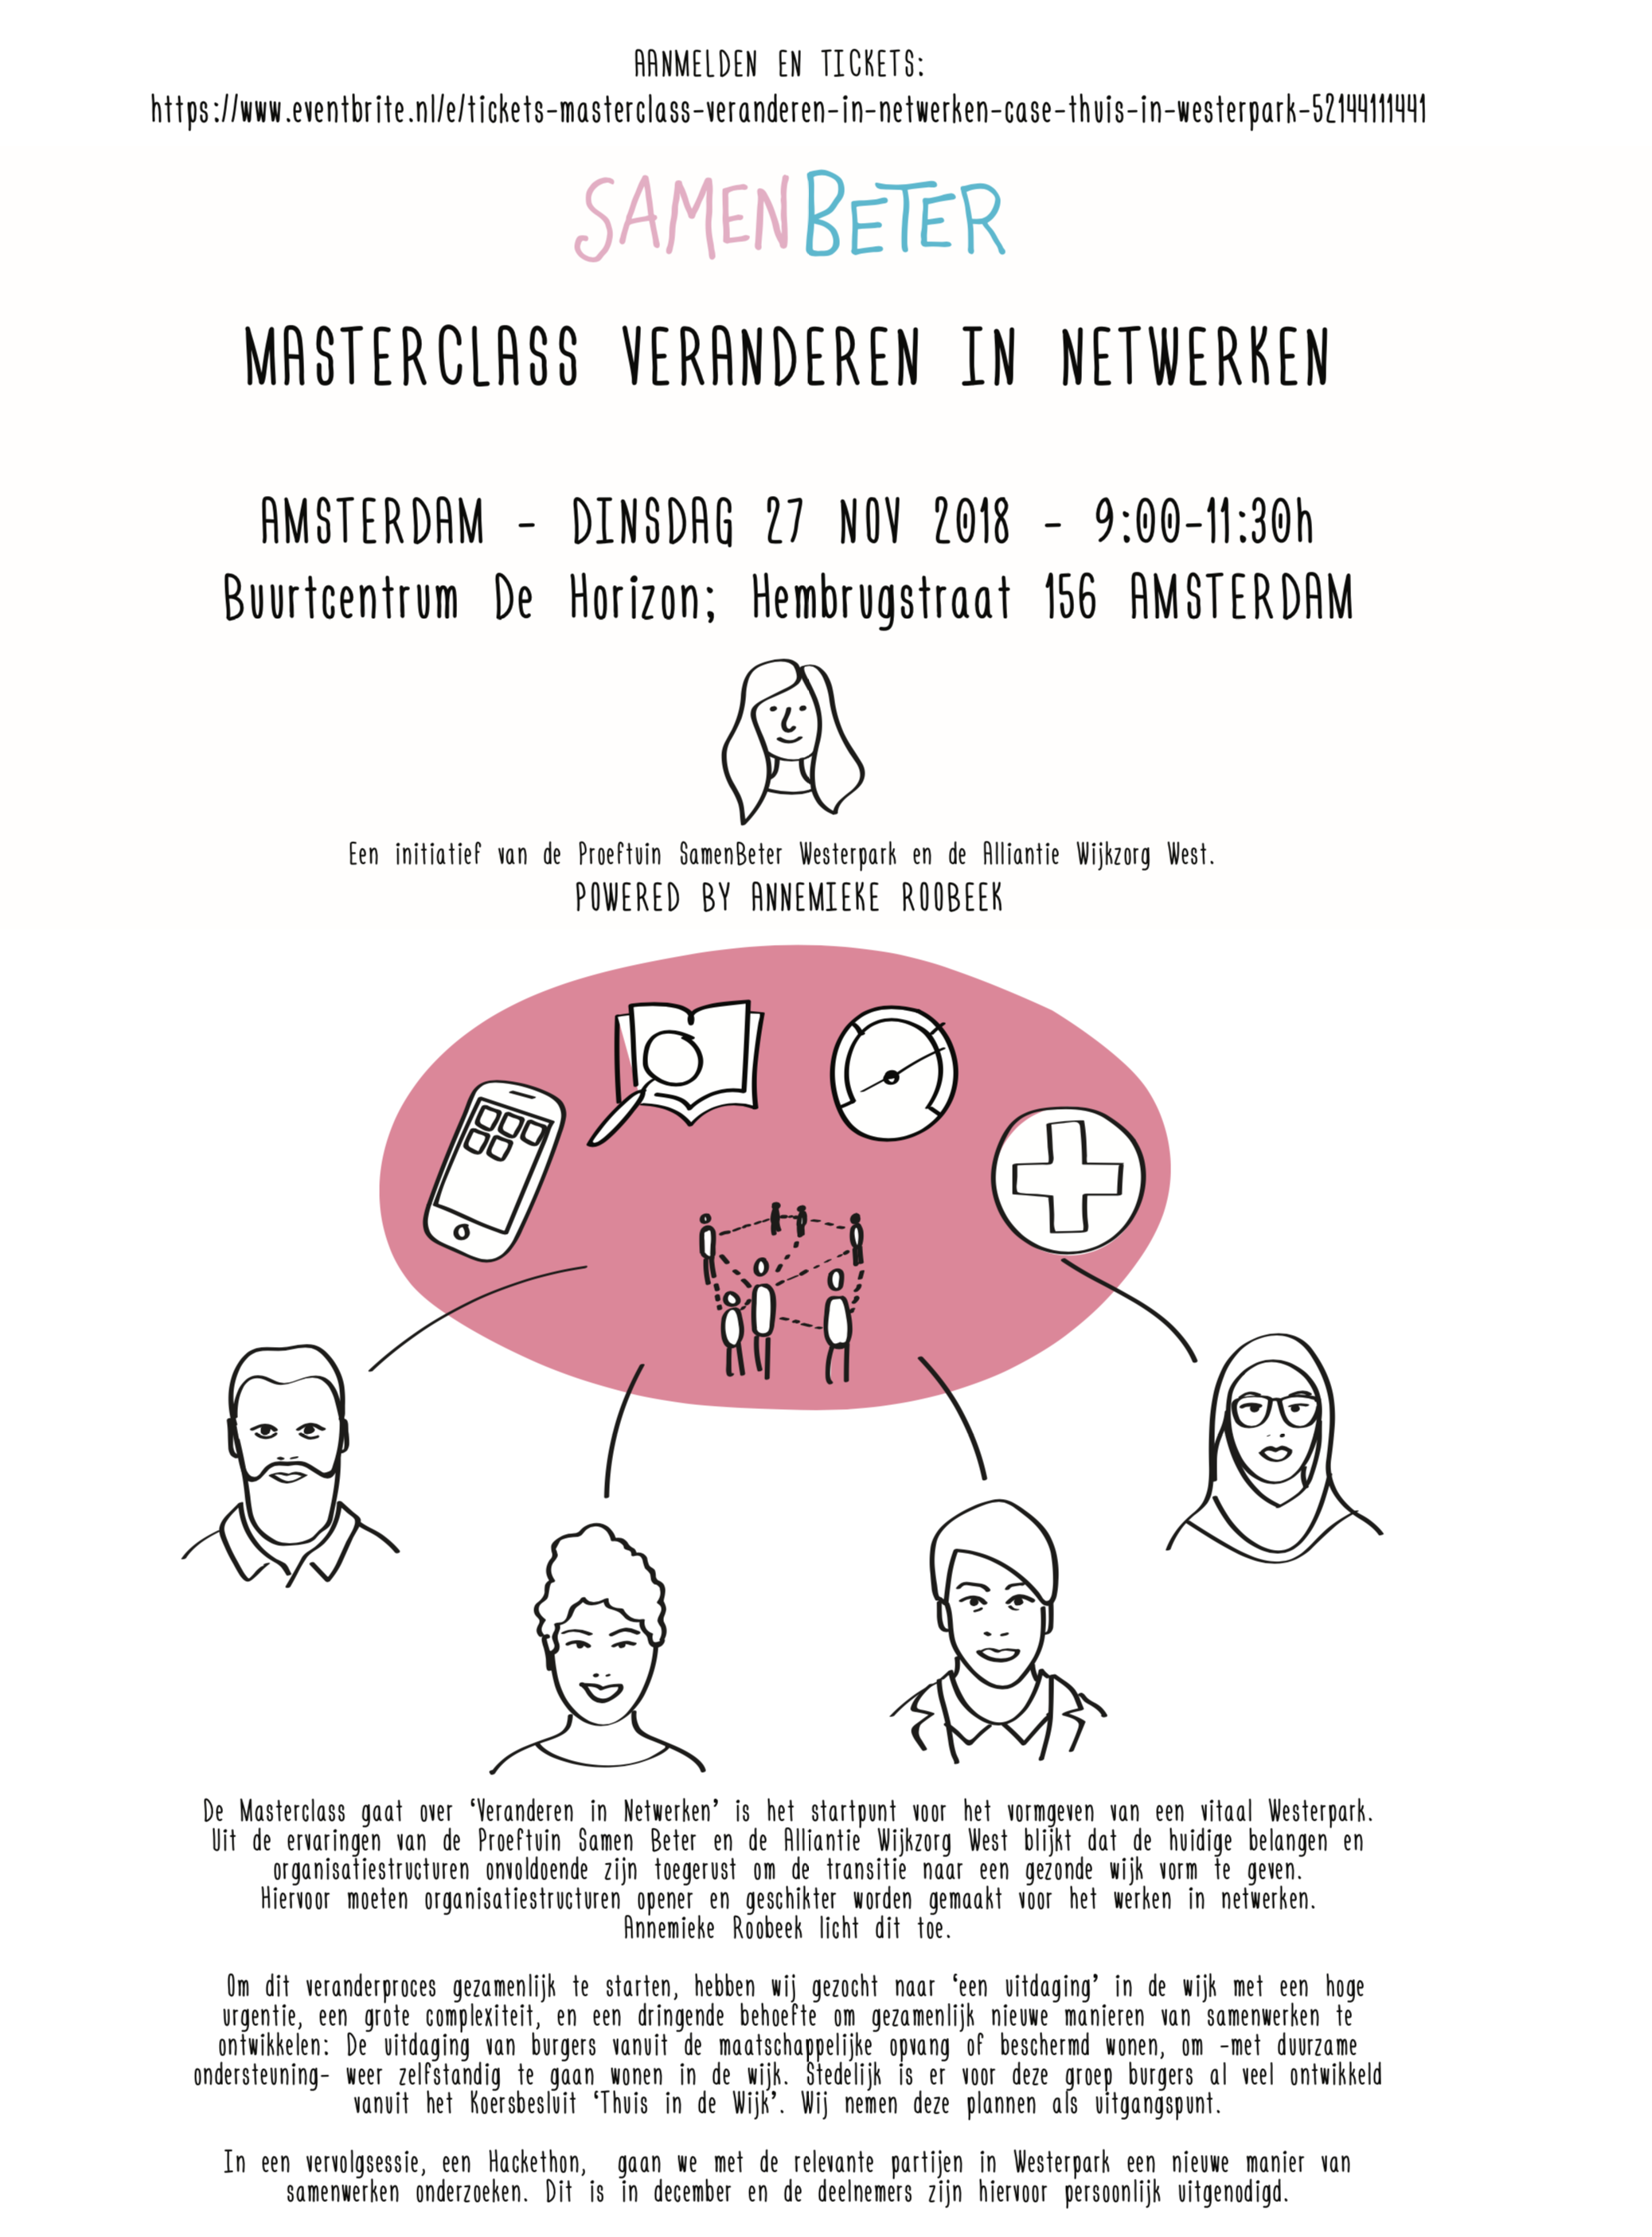 SamenBeter Masterclass Veranderen in Netwerken Amsterdam